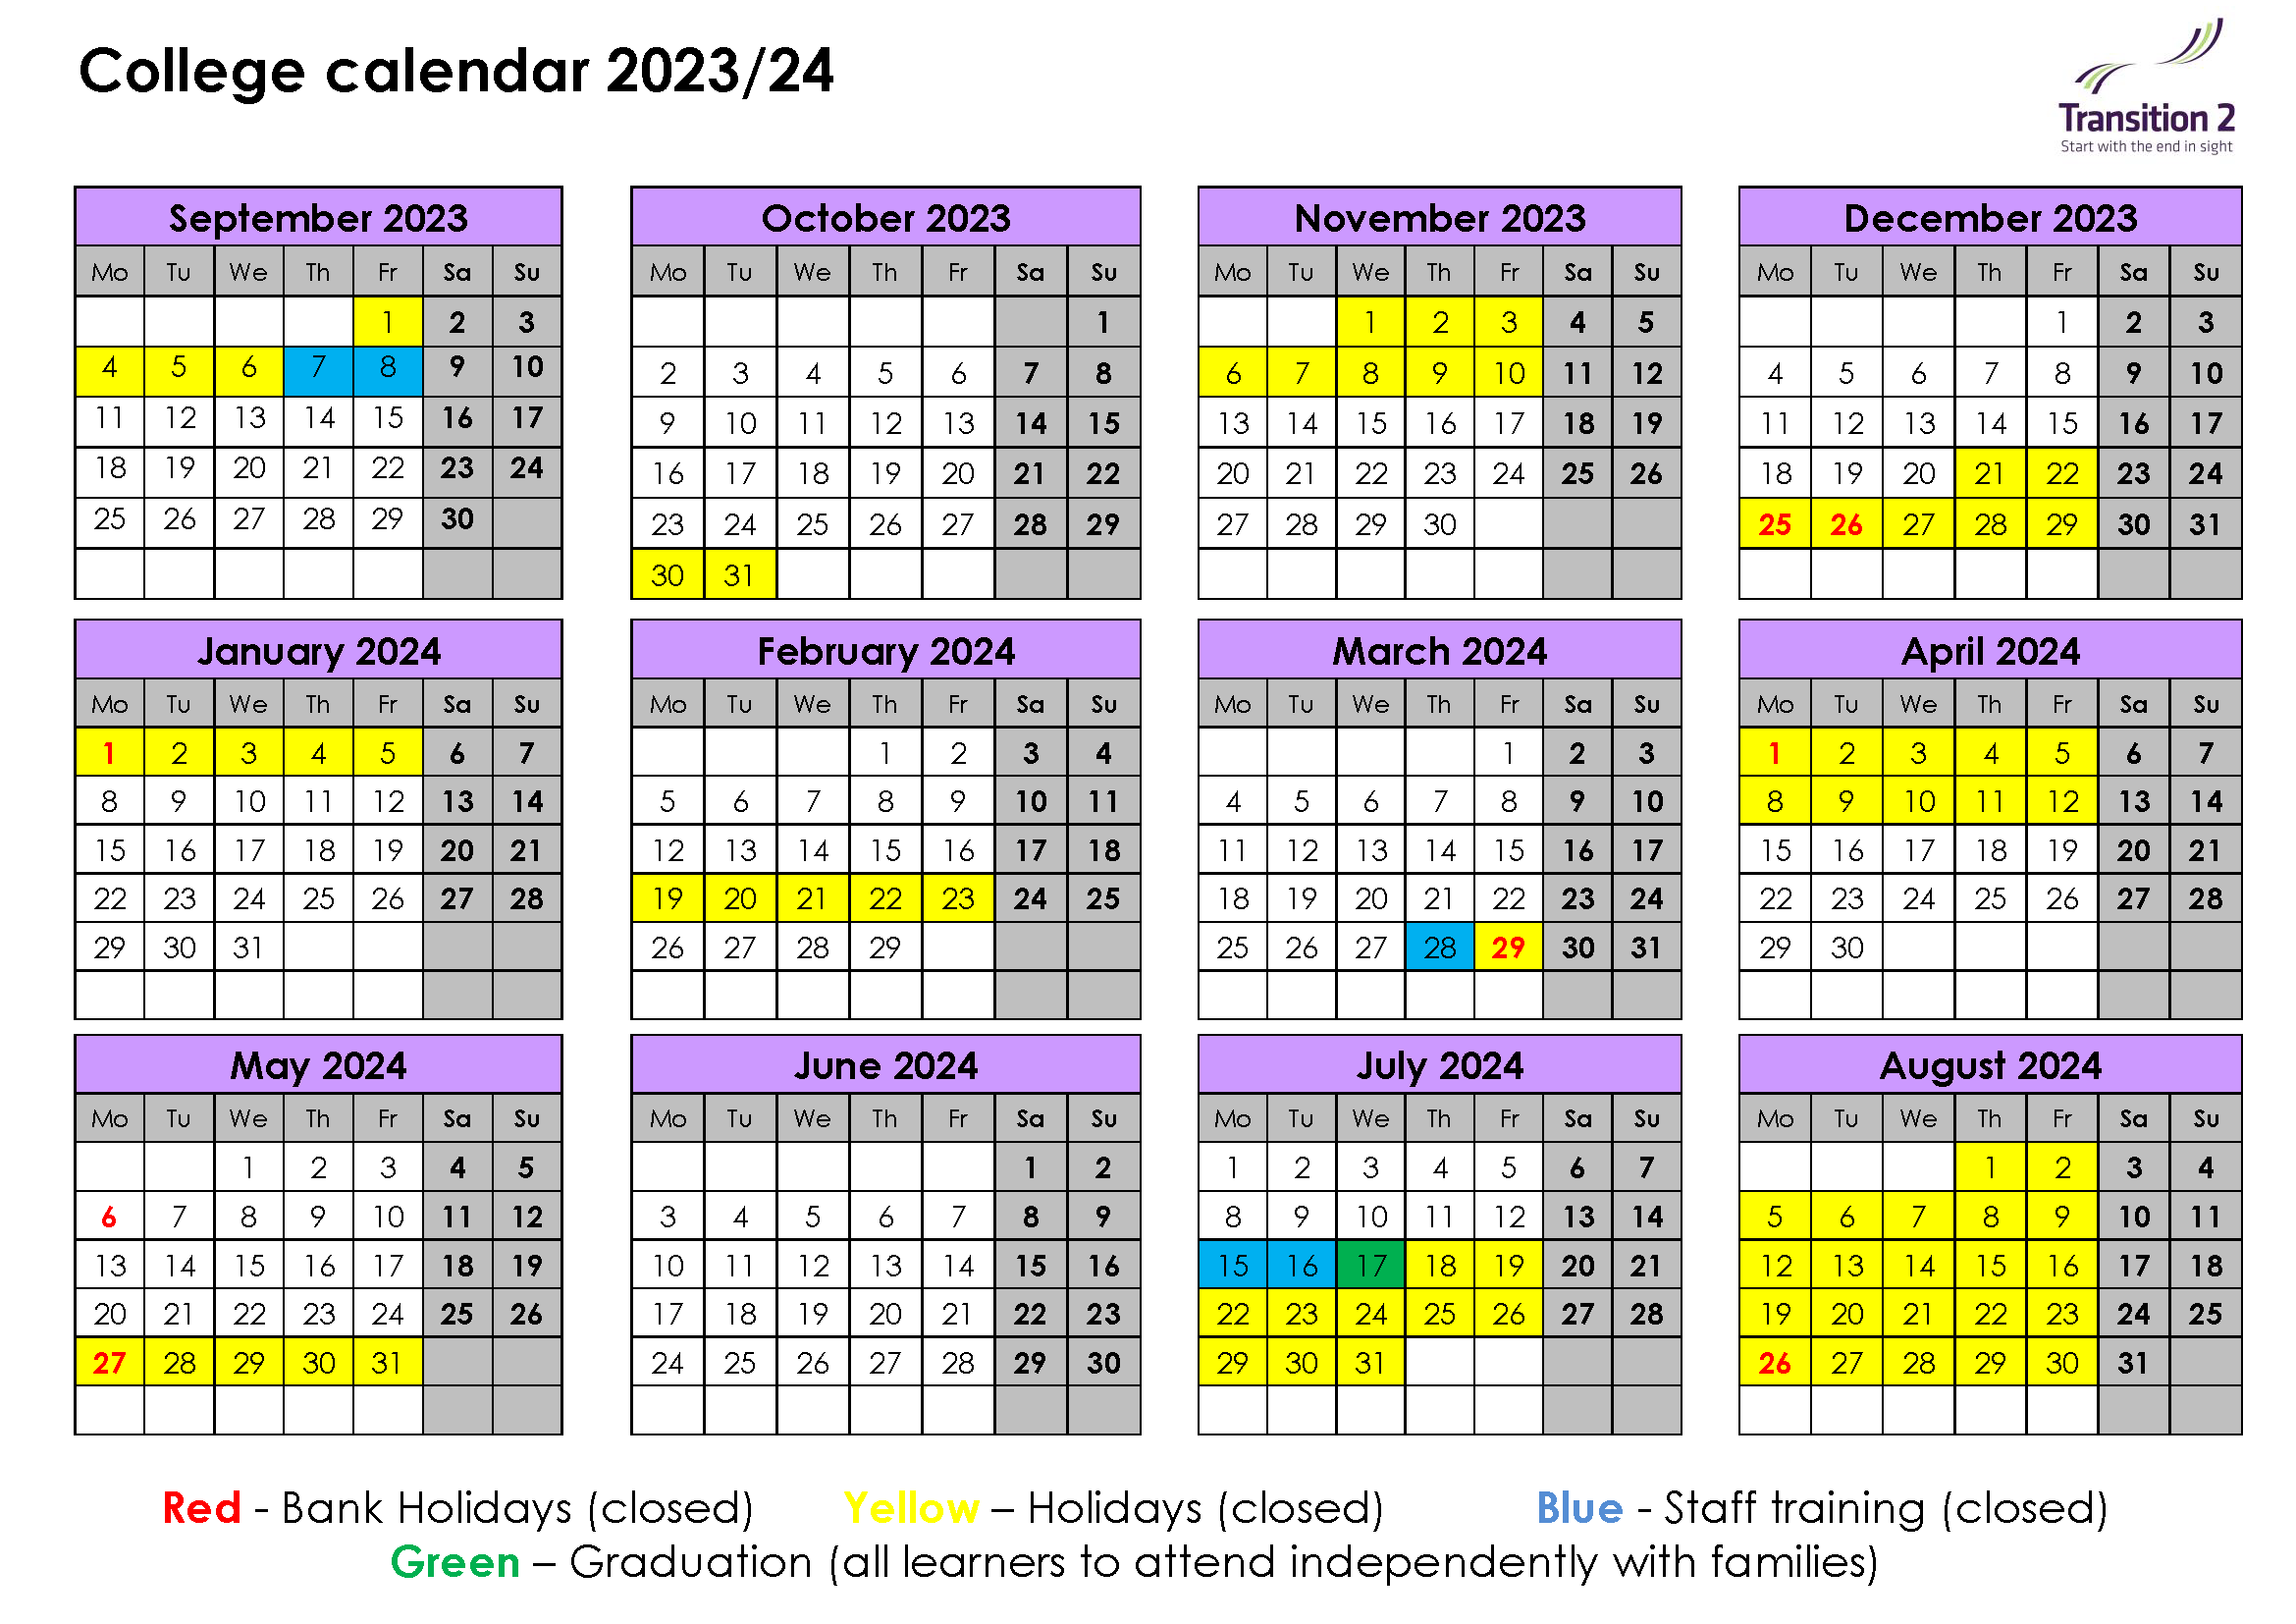 College Calendar 2023-24_final